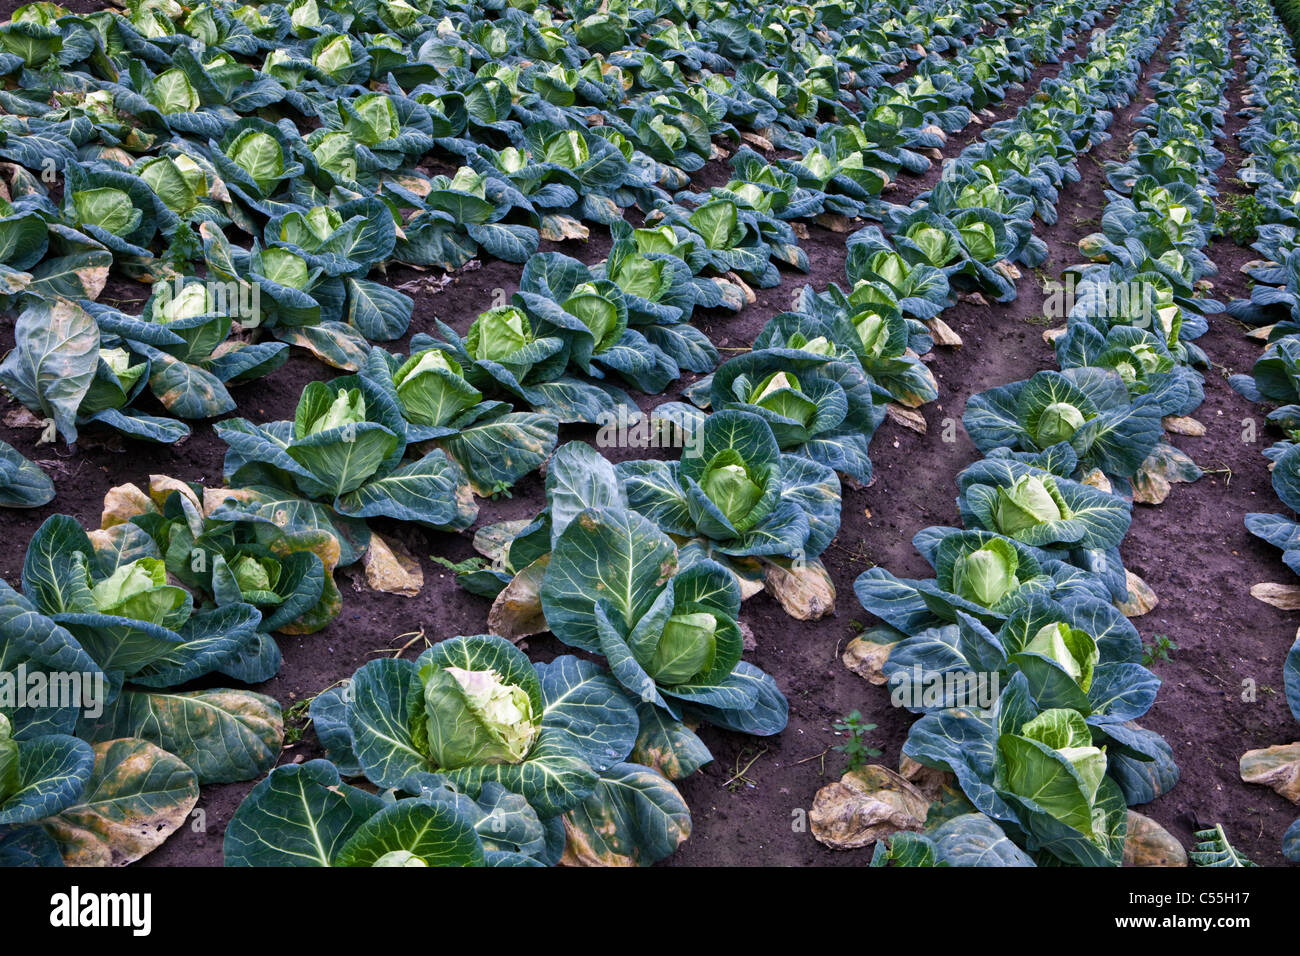 The Netherlands, Valkenburg, growing cabbage. Stock Photo